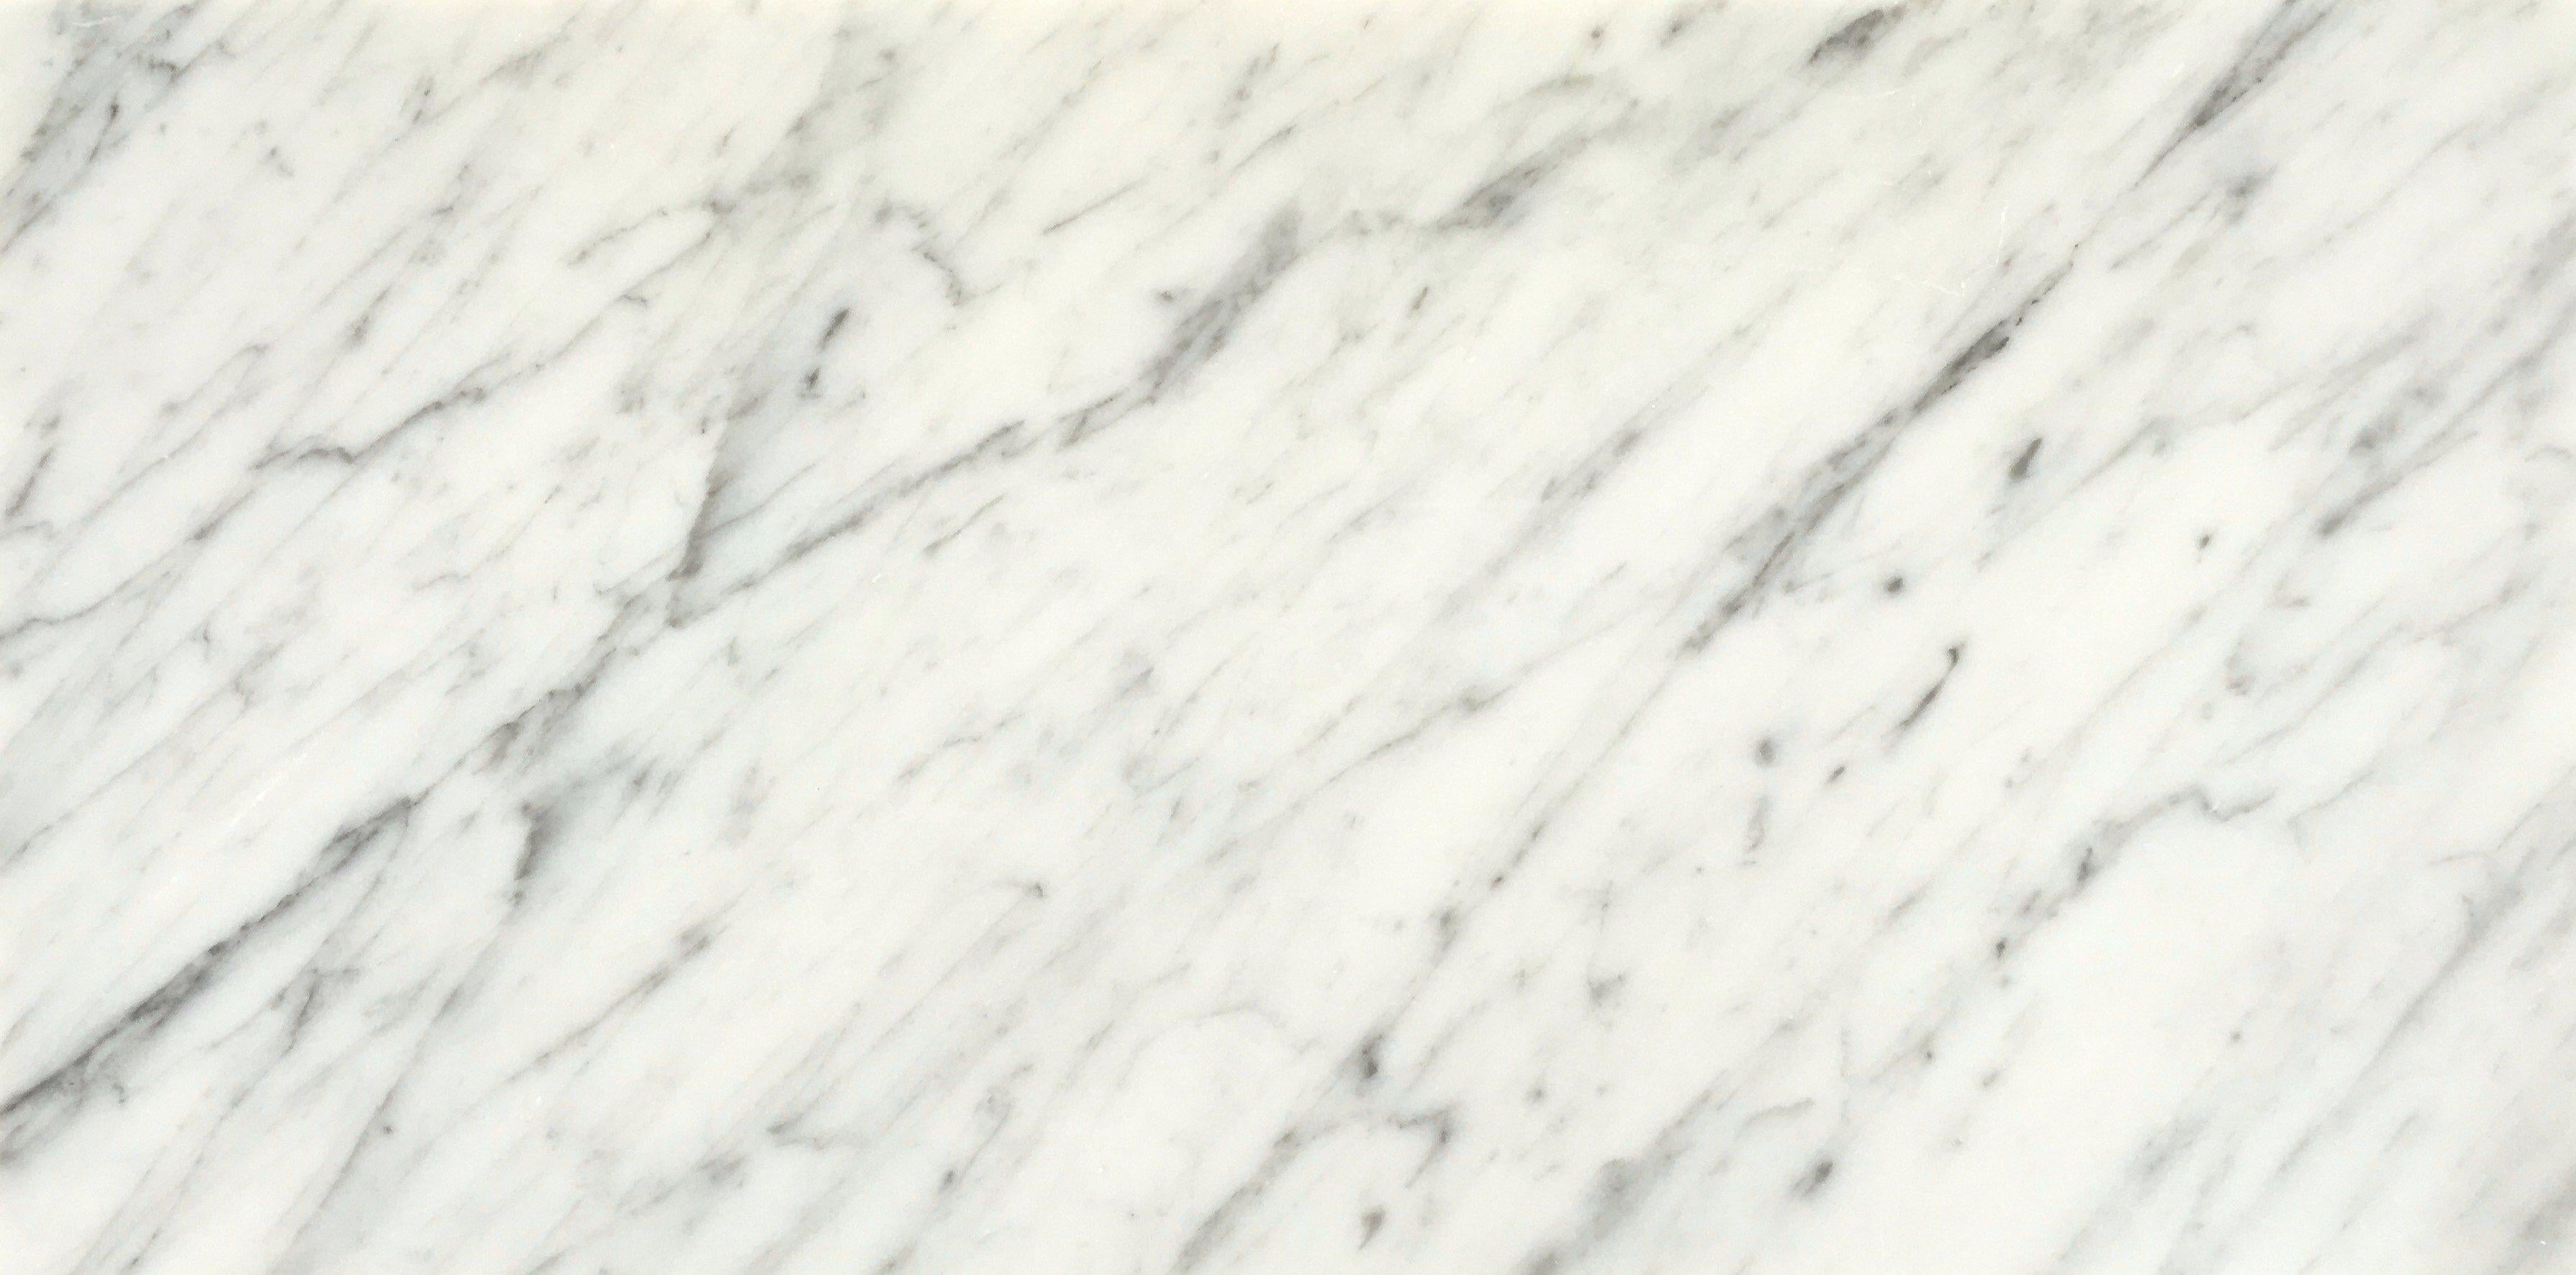 Polychrome marble washbasin 
Designed by F.Scarsellati
Size: Cm diameter 130 x 65 x height 94
Materials: Bianco Carrara, Sand Beach, Giallo Siena, Calacatta, Travetino Nazionale.